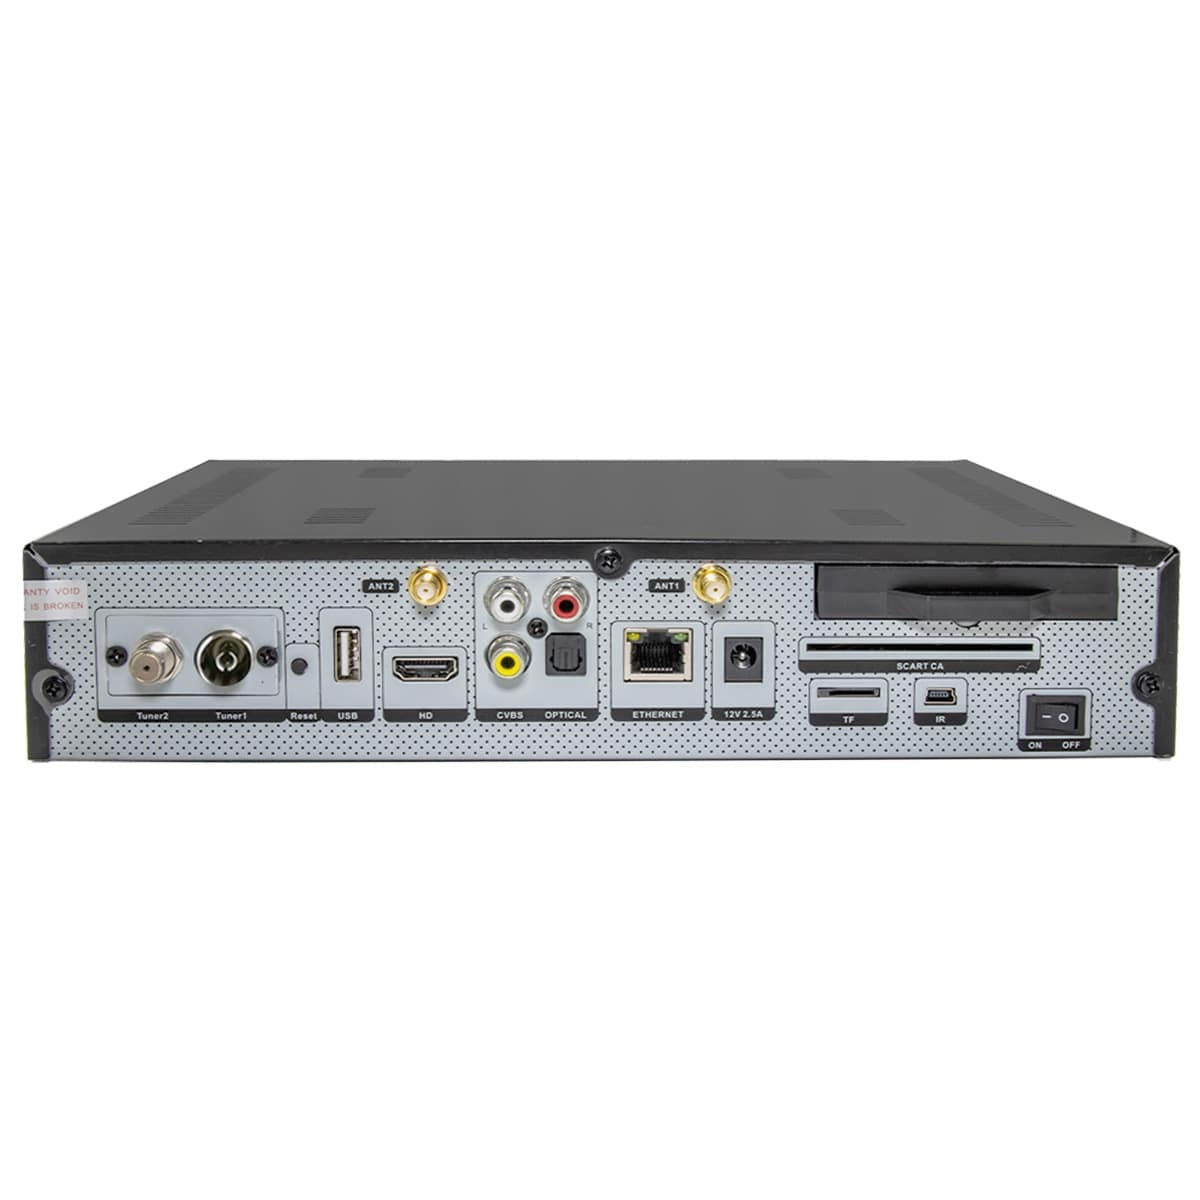 MUT@NT HD66 SE Schwarz) 1xDVB-S2X 500GB 1xDVB-C/T2 (PVR-Funktion, Tuner, Sat-Receiver Twin